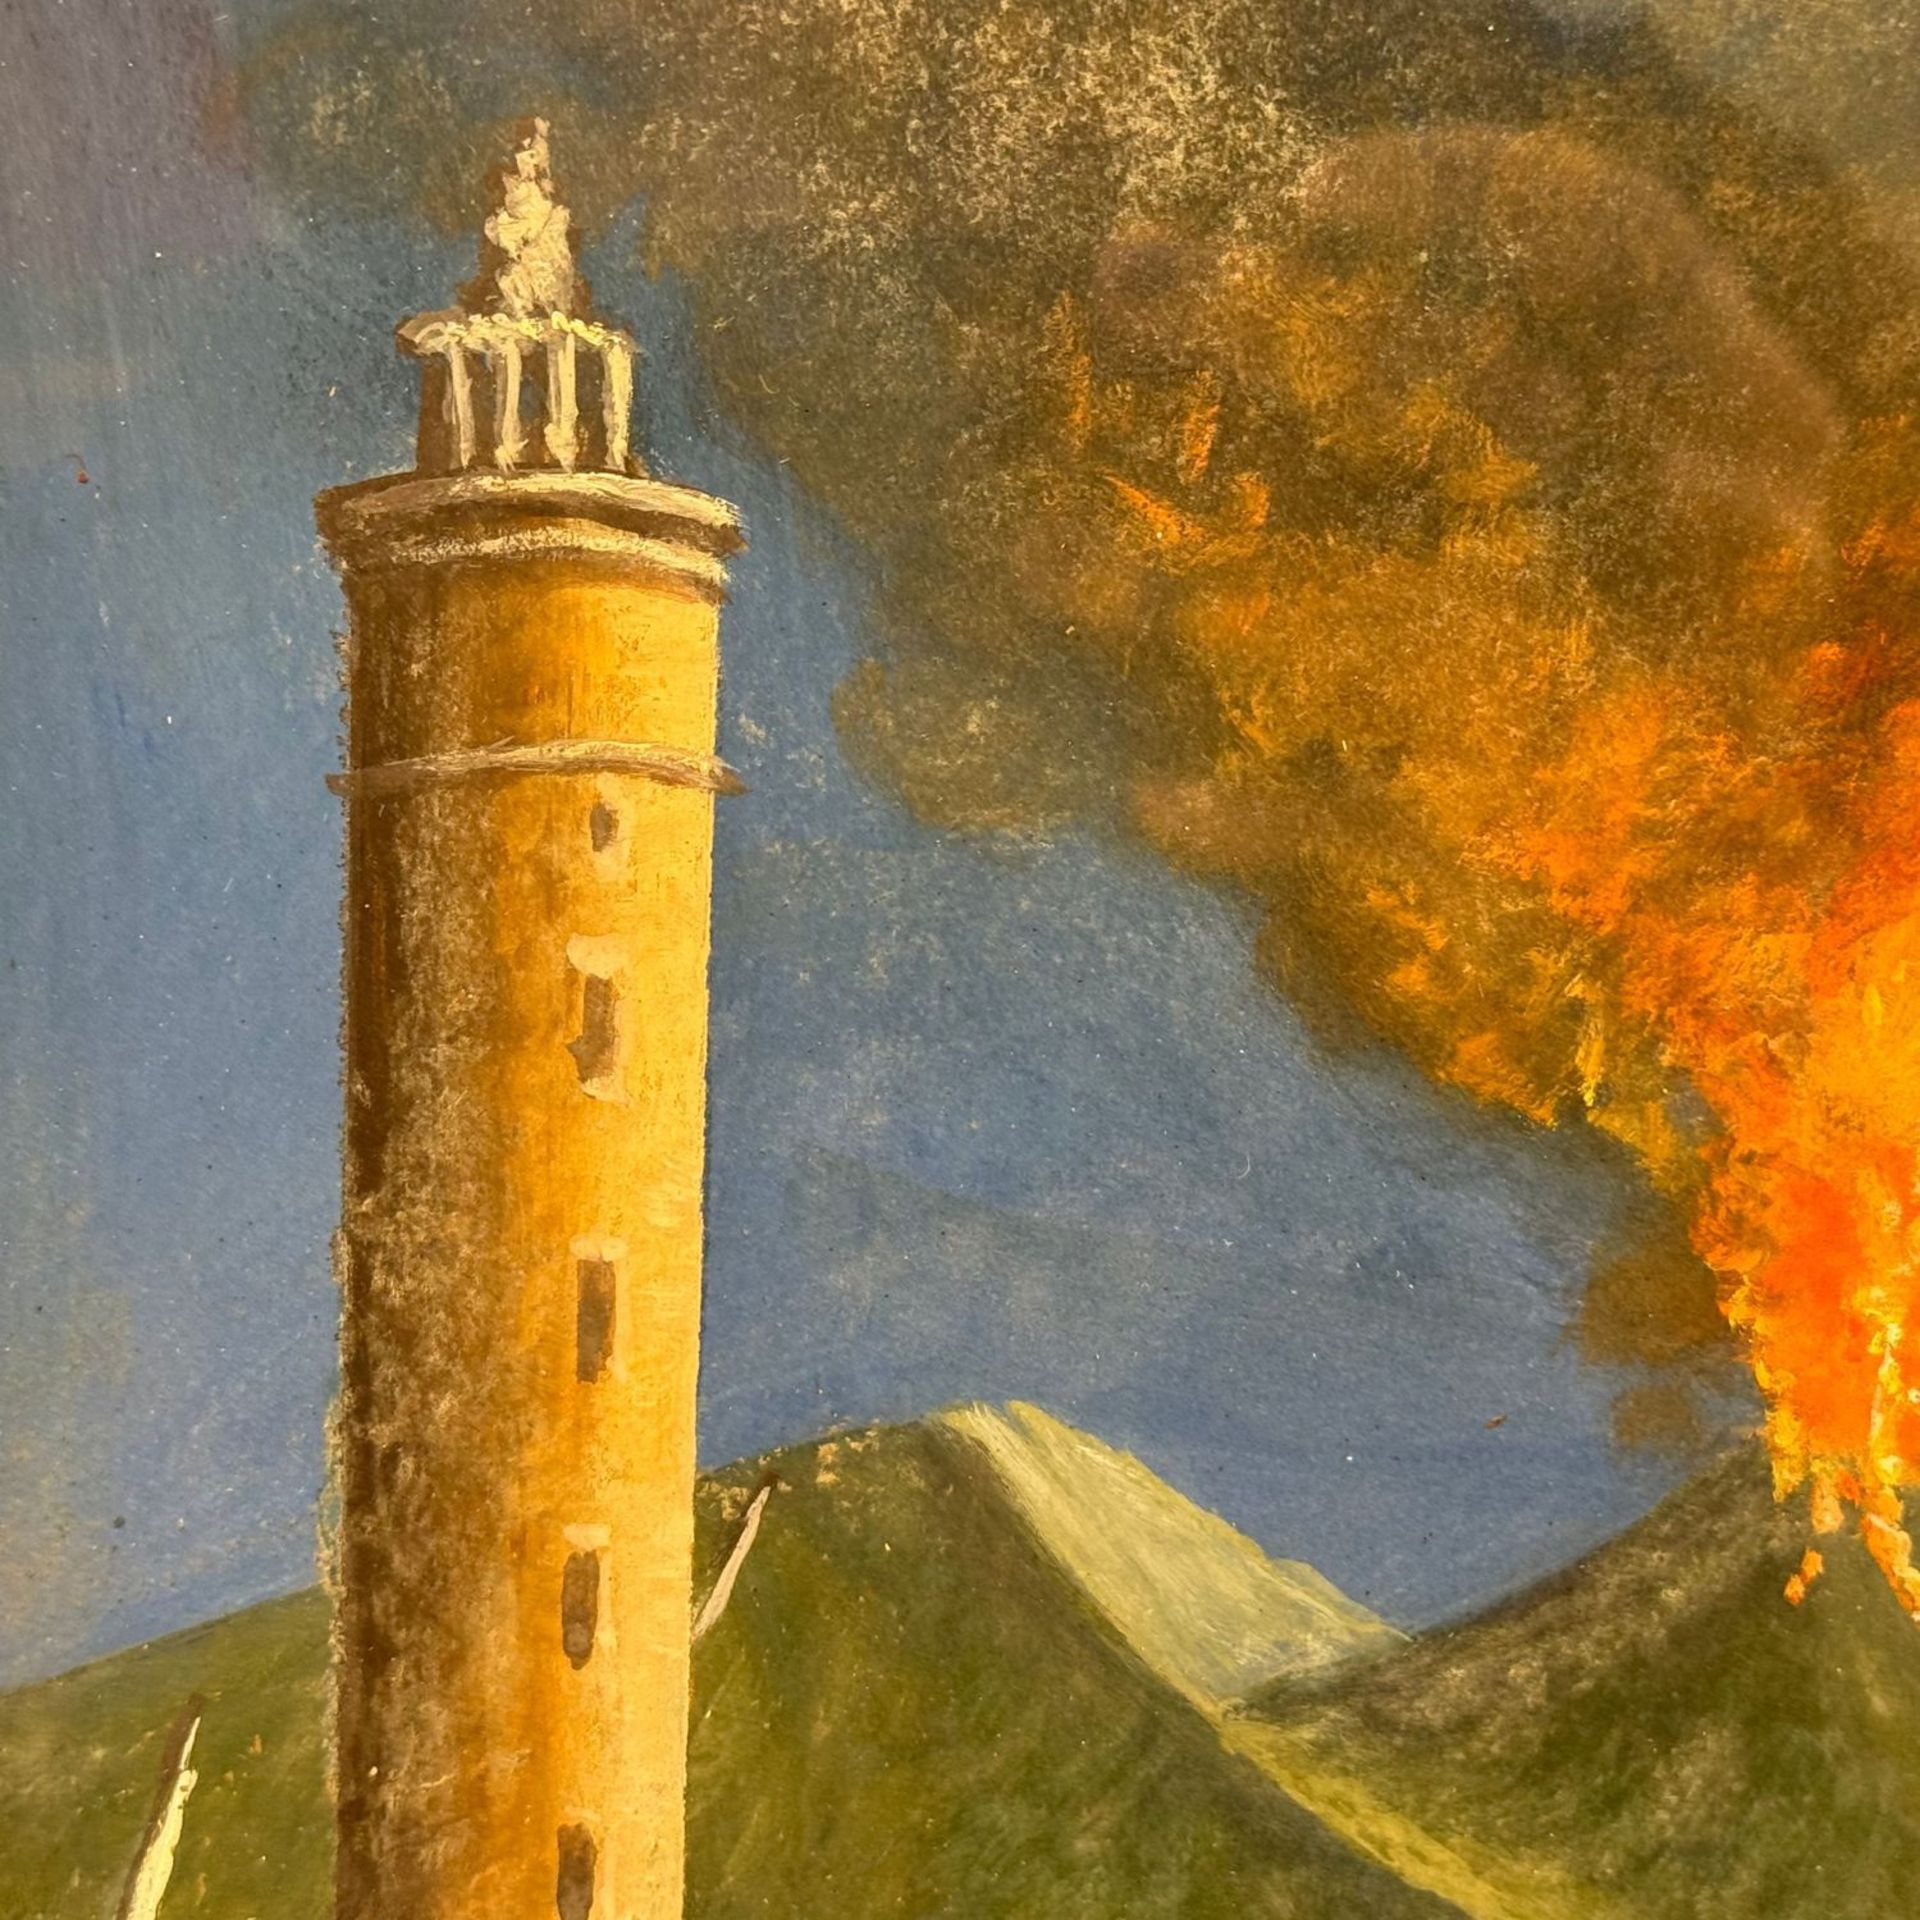 Eruption of Mount Vesuvius in Naples - Image 6 of 9